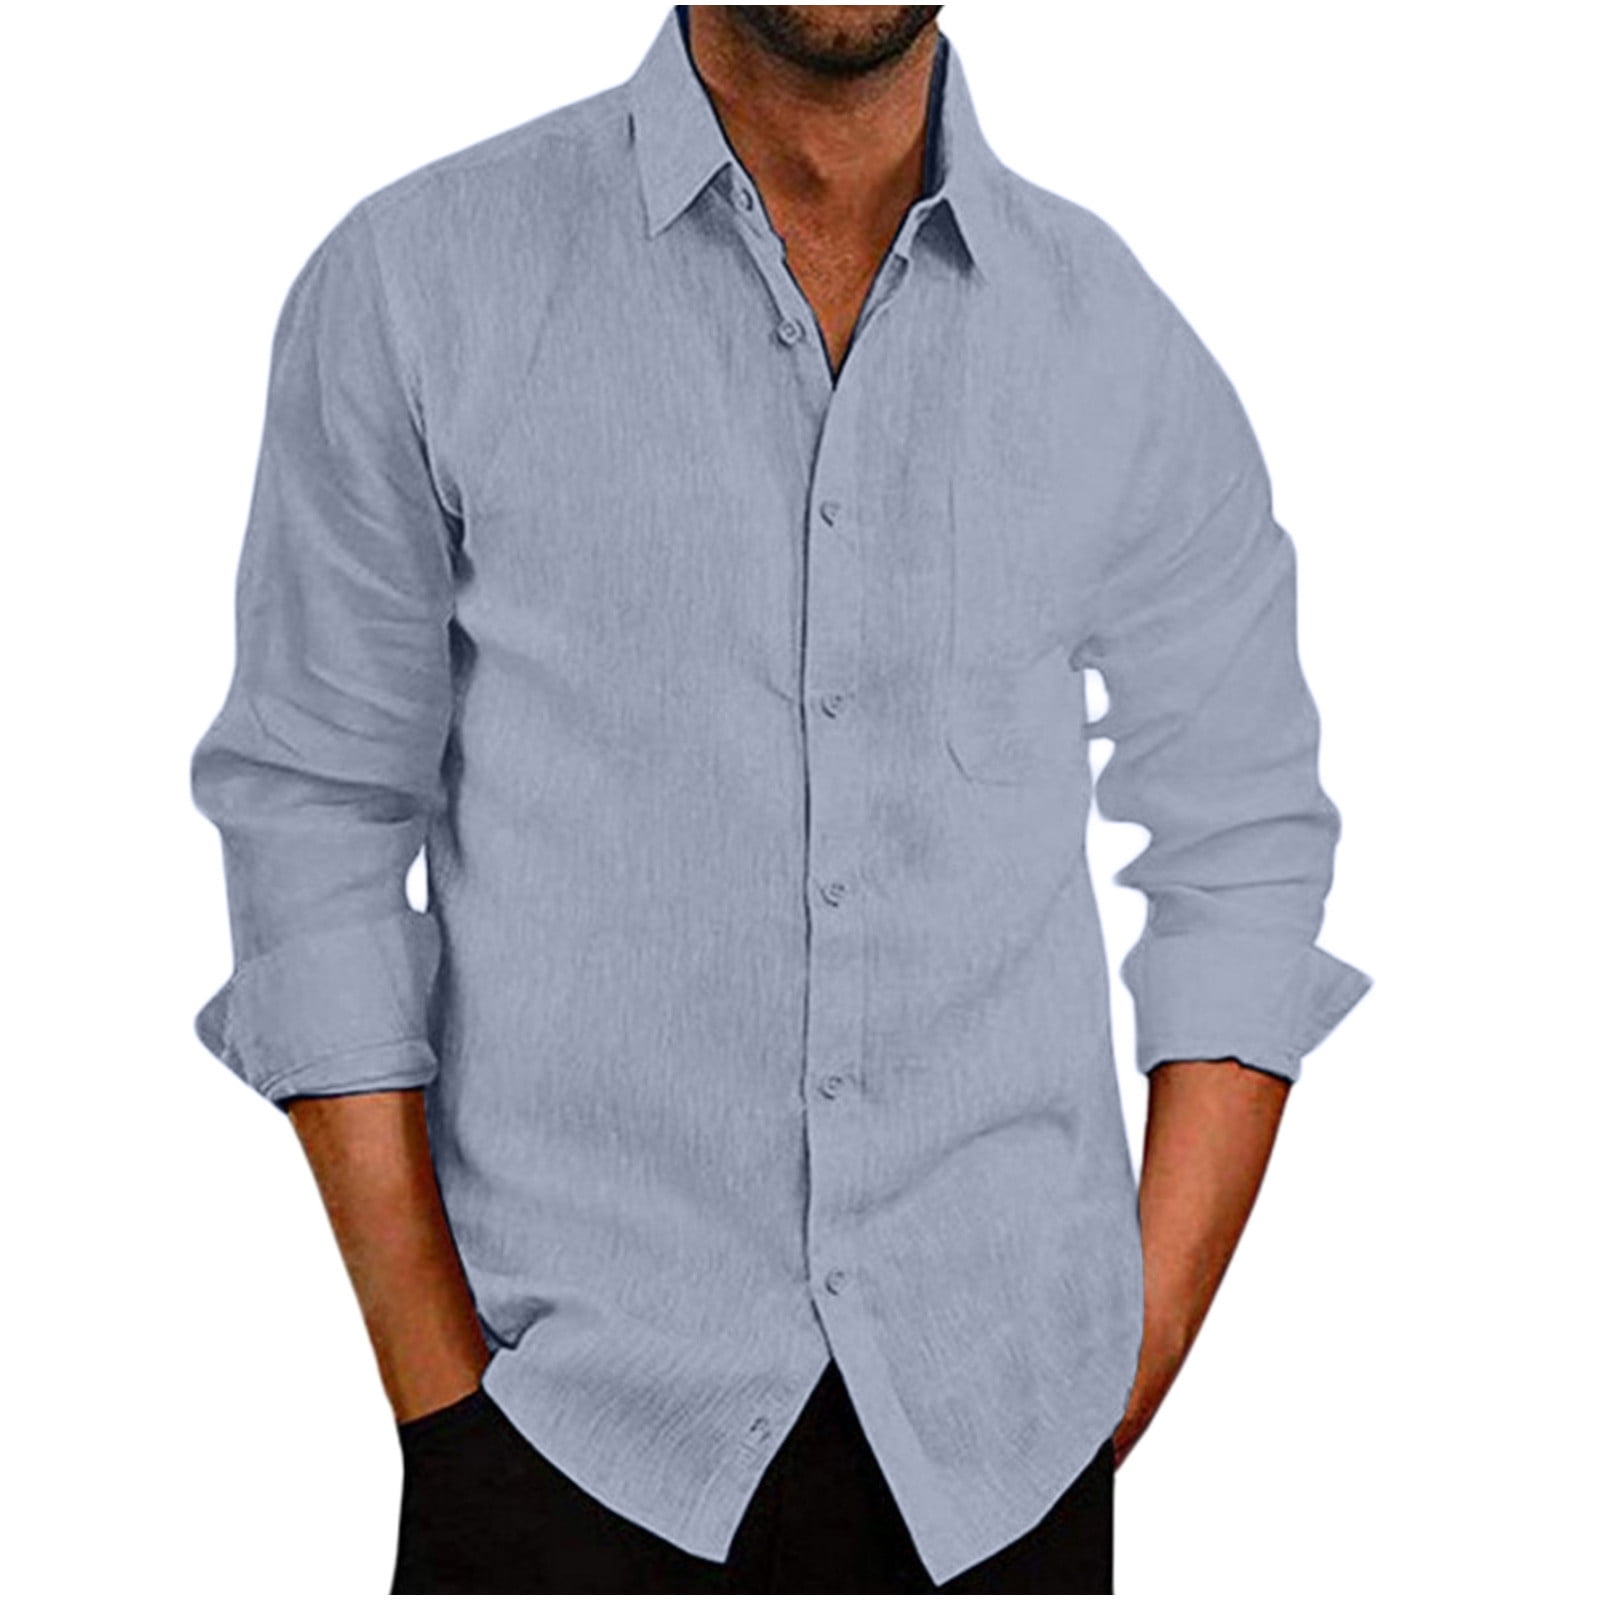 Miluxas Men's Long Sleeve Sun Protection Shirt UPF 50+ UV Quick